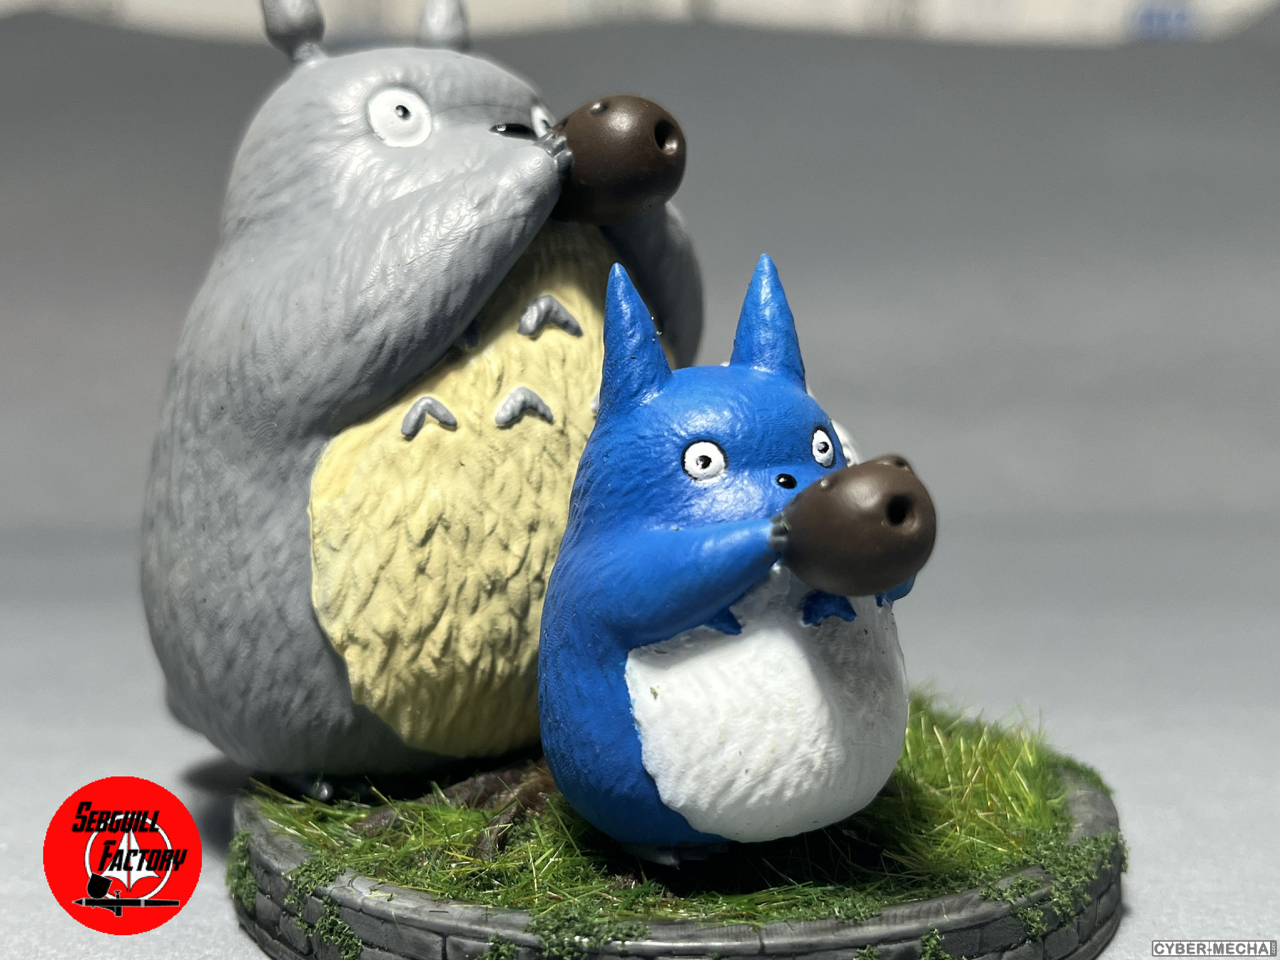 Print 3D : Totoro 1701076945